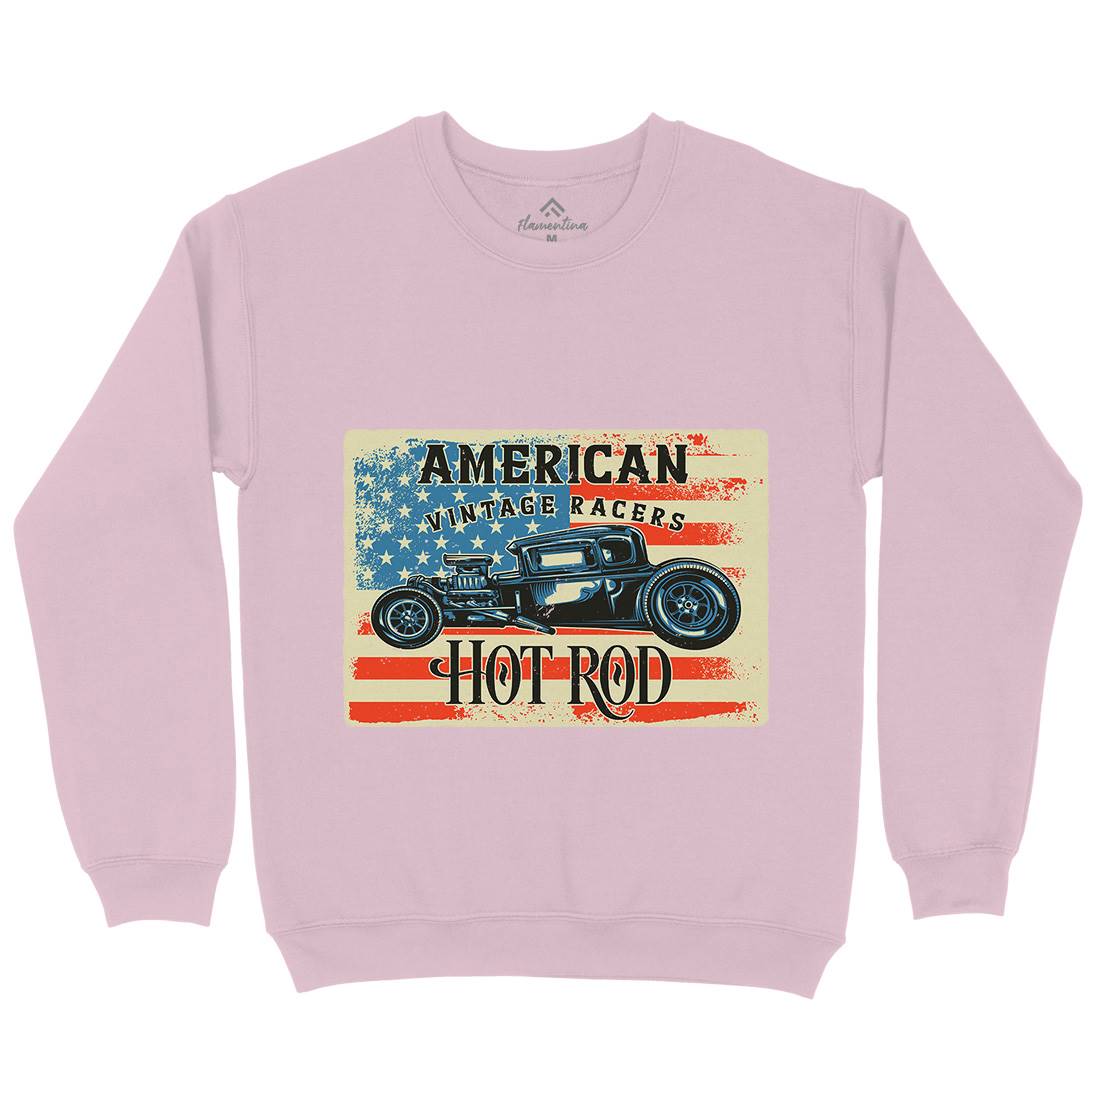 Hotrod Kids Crew Neck Sweatshirt Cars B136